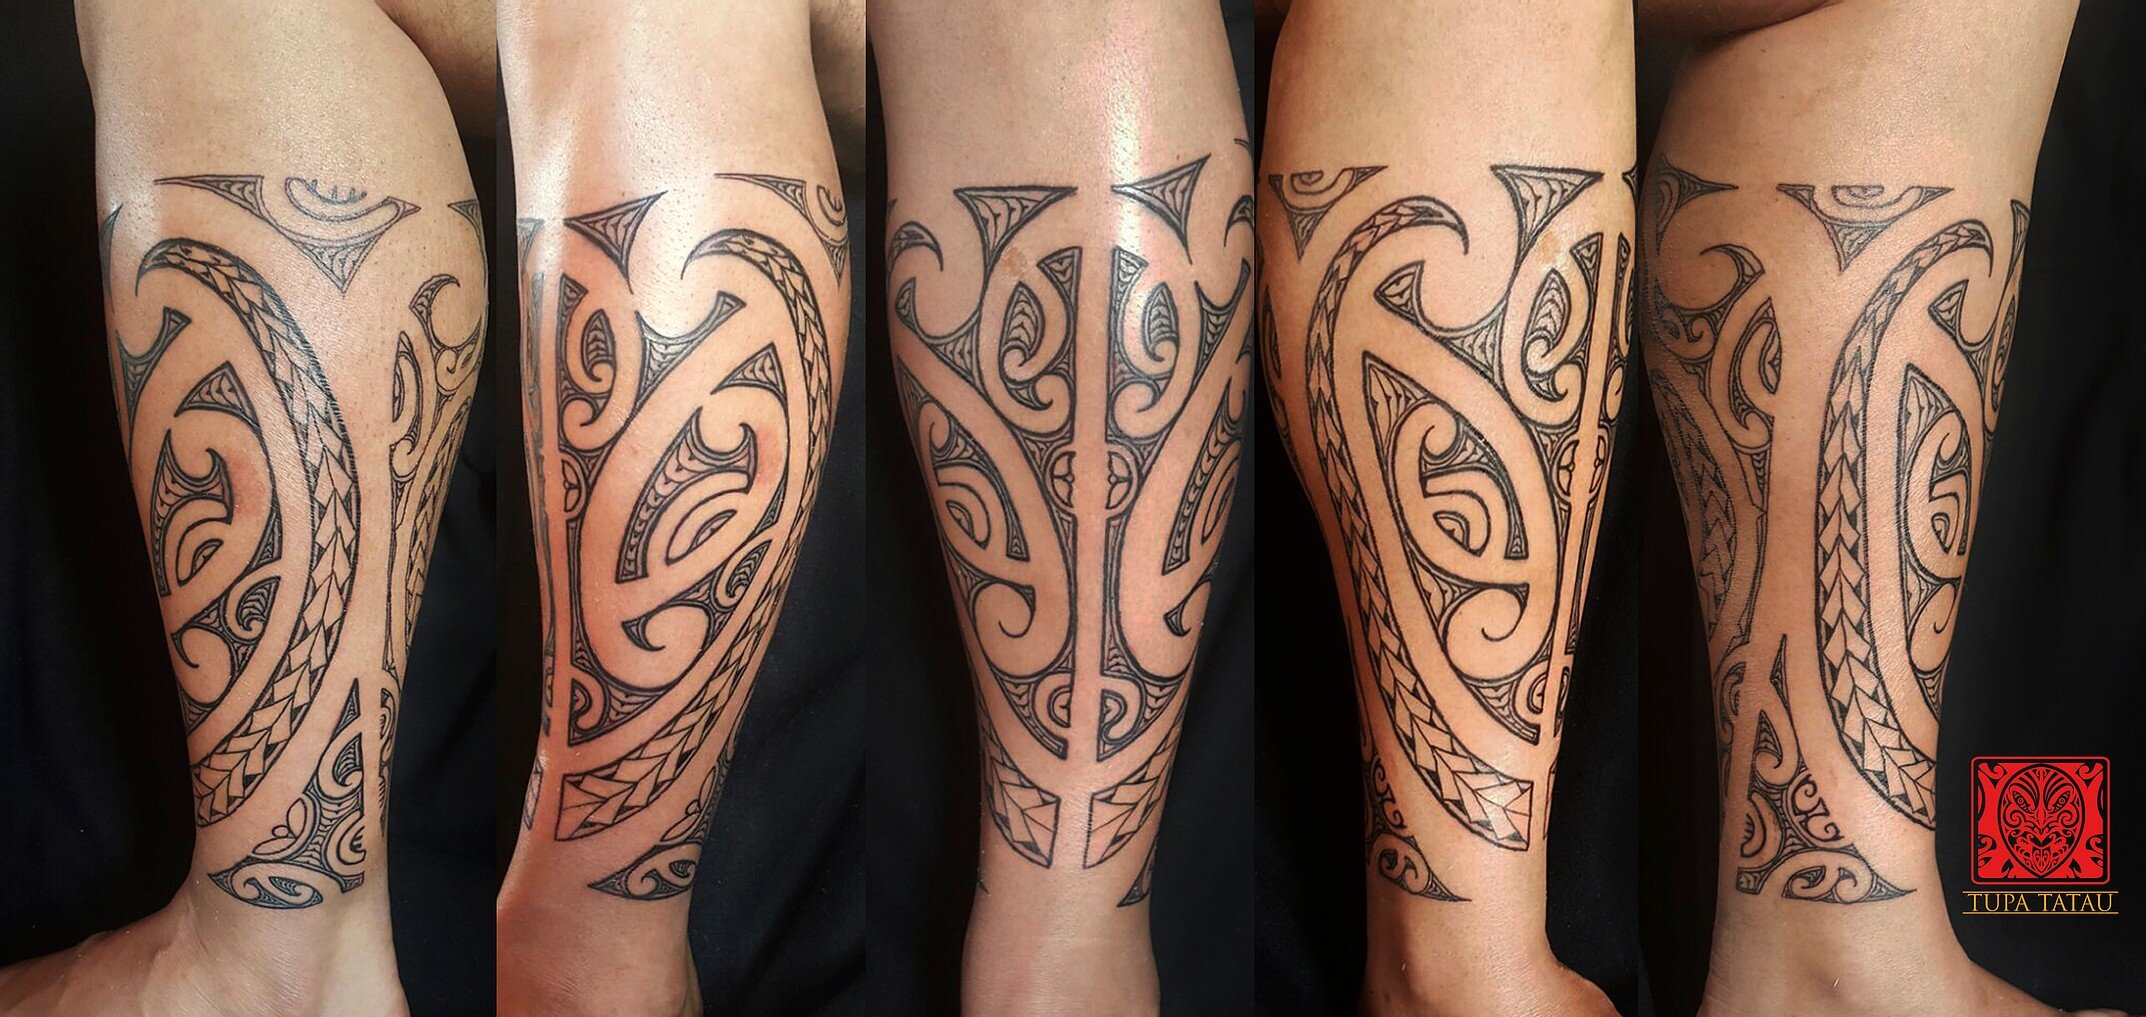 Andres “Panda” Pakariti - Polynesian-style tattoo artist in Easter Island